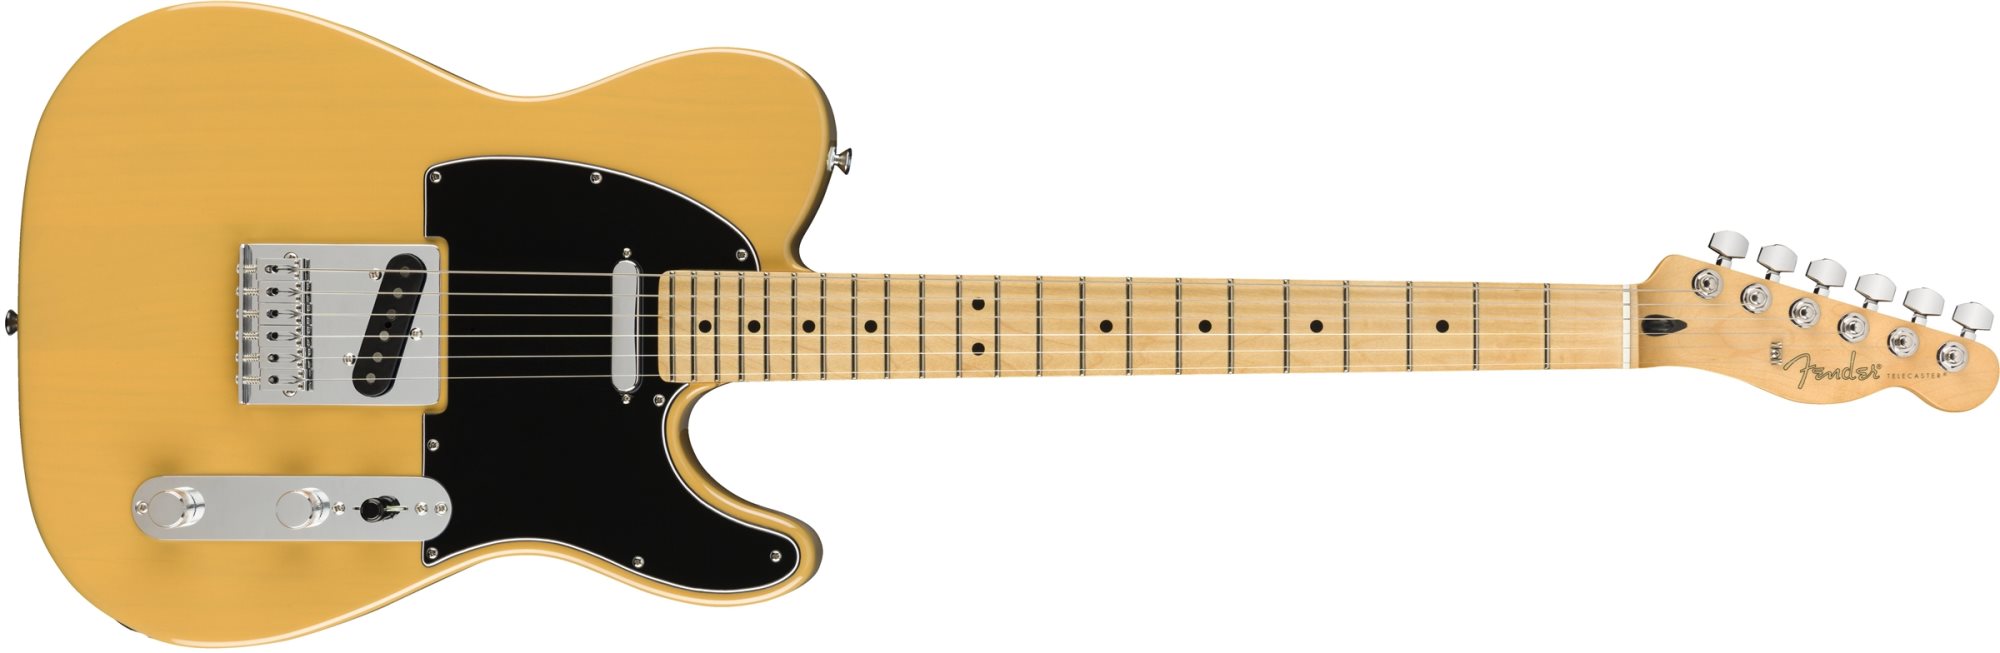 FENDER #0145212550 Player Series Telecaster Electric Guitar (Butterscotch Blonde)